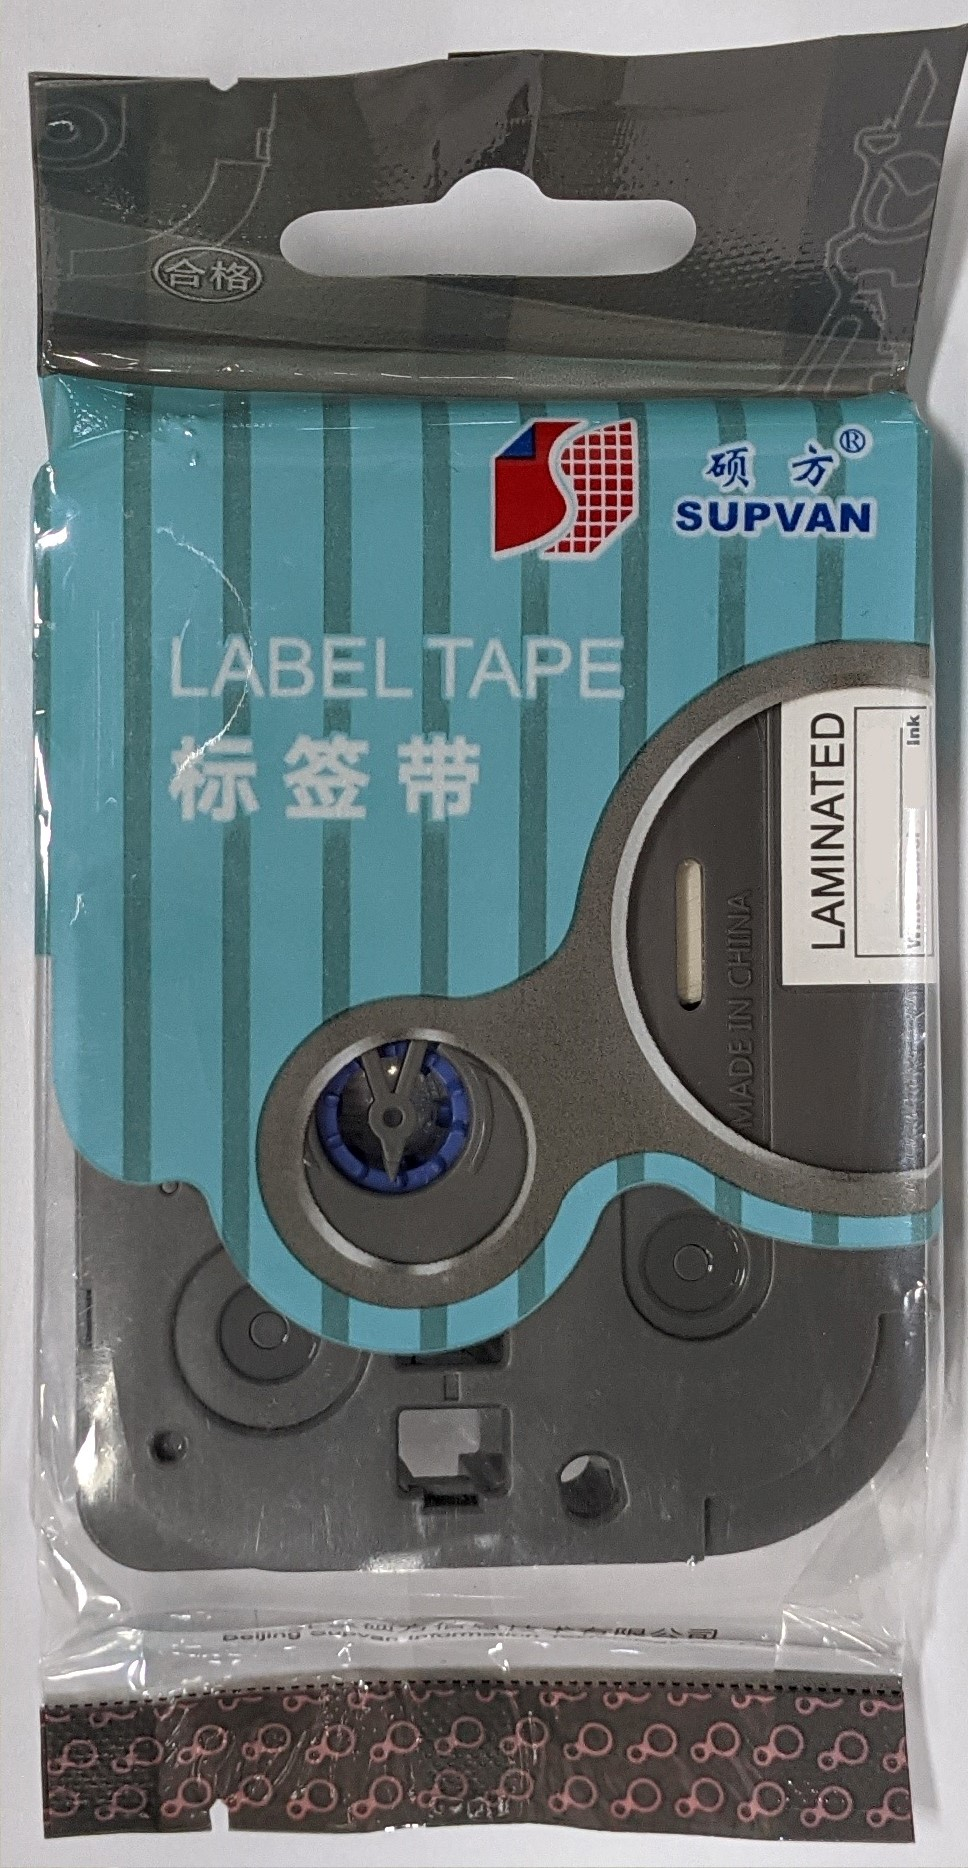 Samolepicí páska Supvan L-831E, 12mm x 8m, černý tisk / matný stříbrný podklad, laminovaná